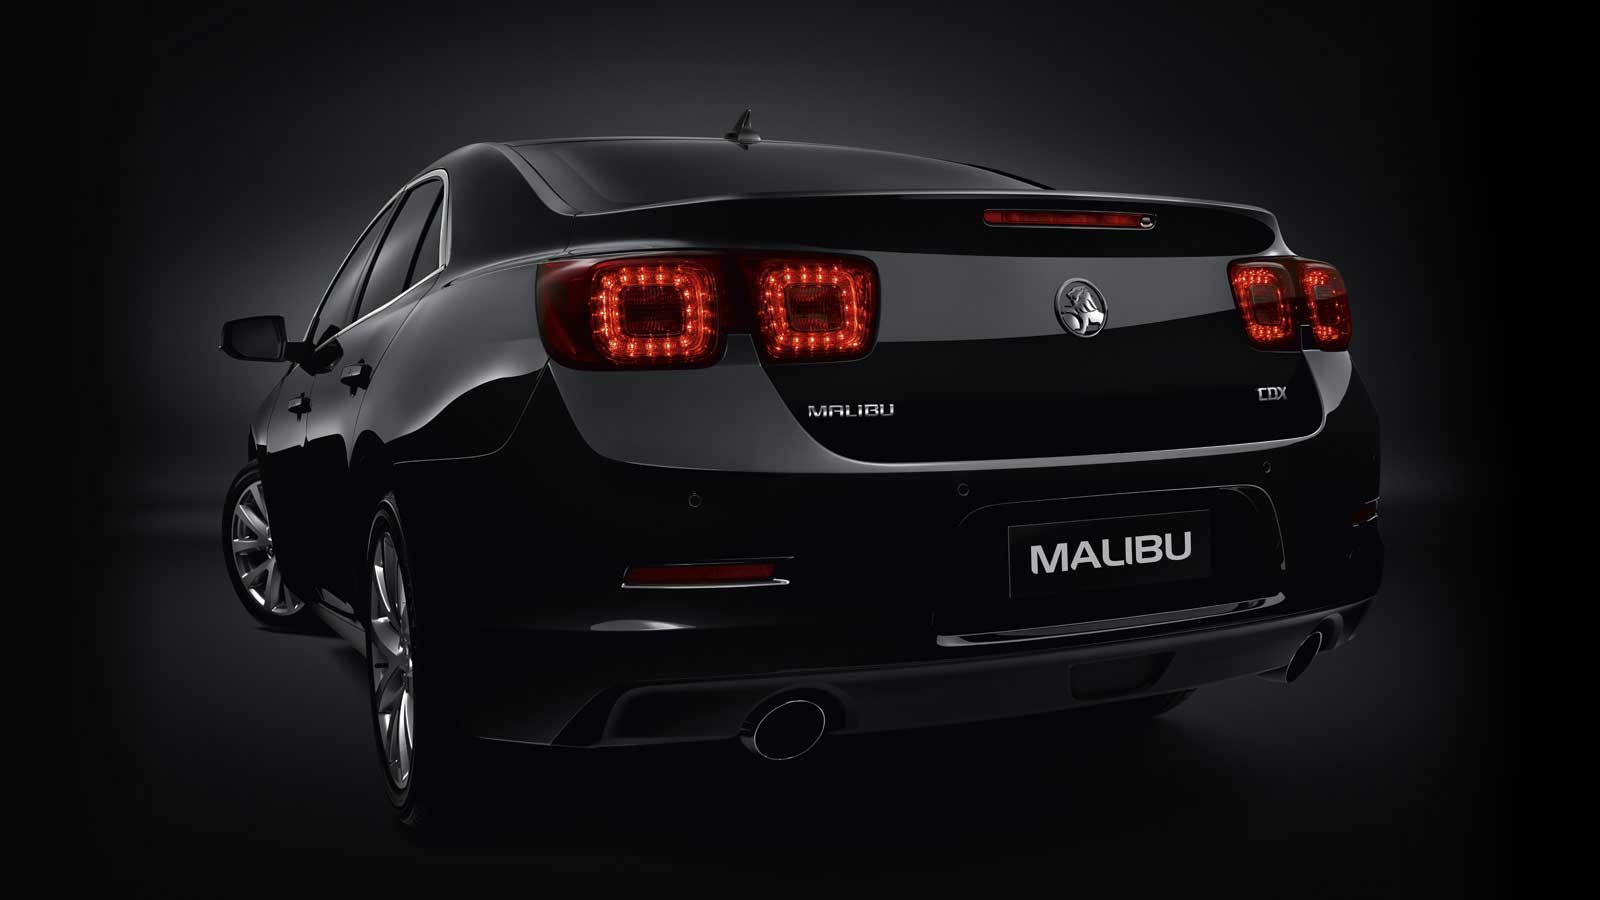 Holden Malibu CDX 2.4L Exterior rear view